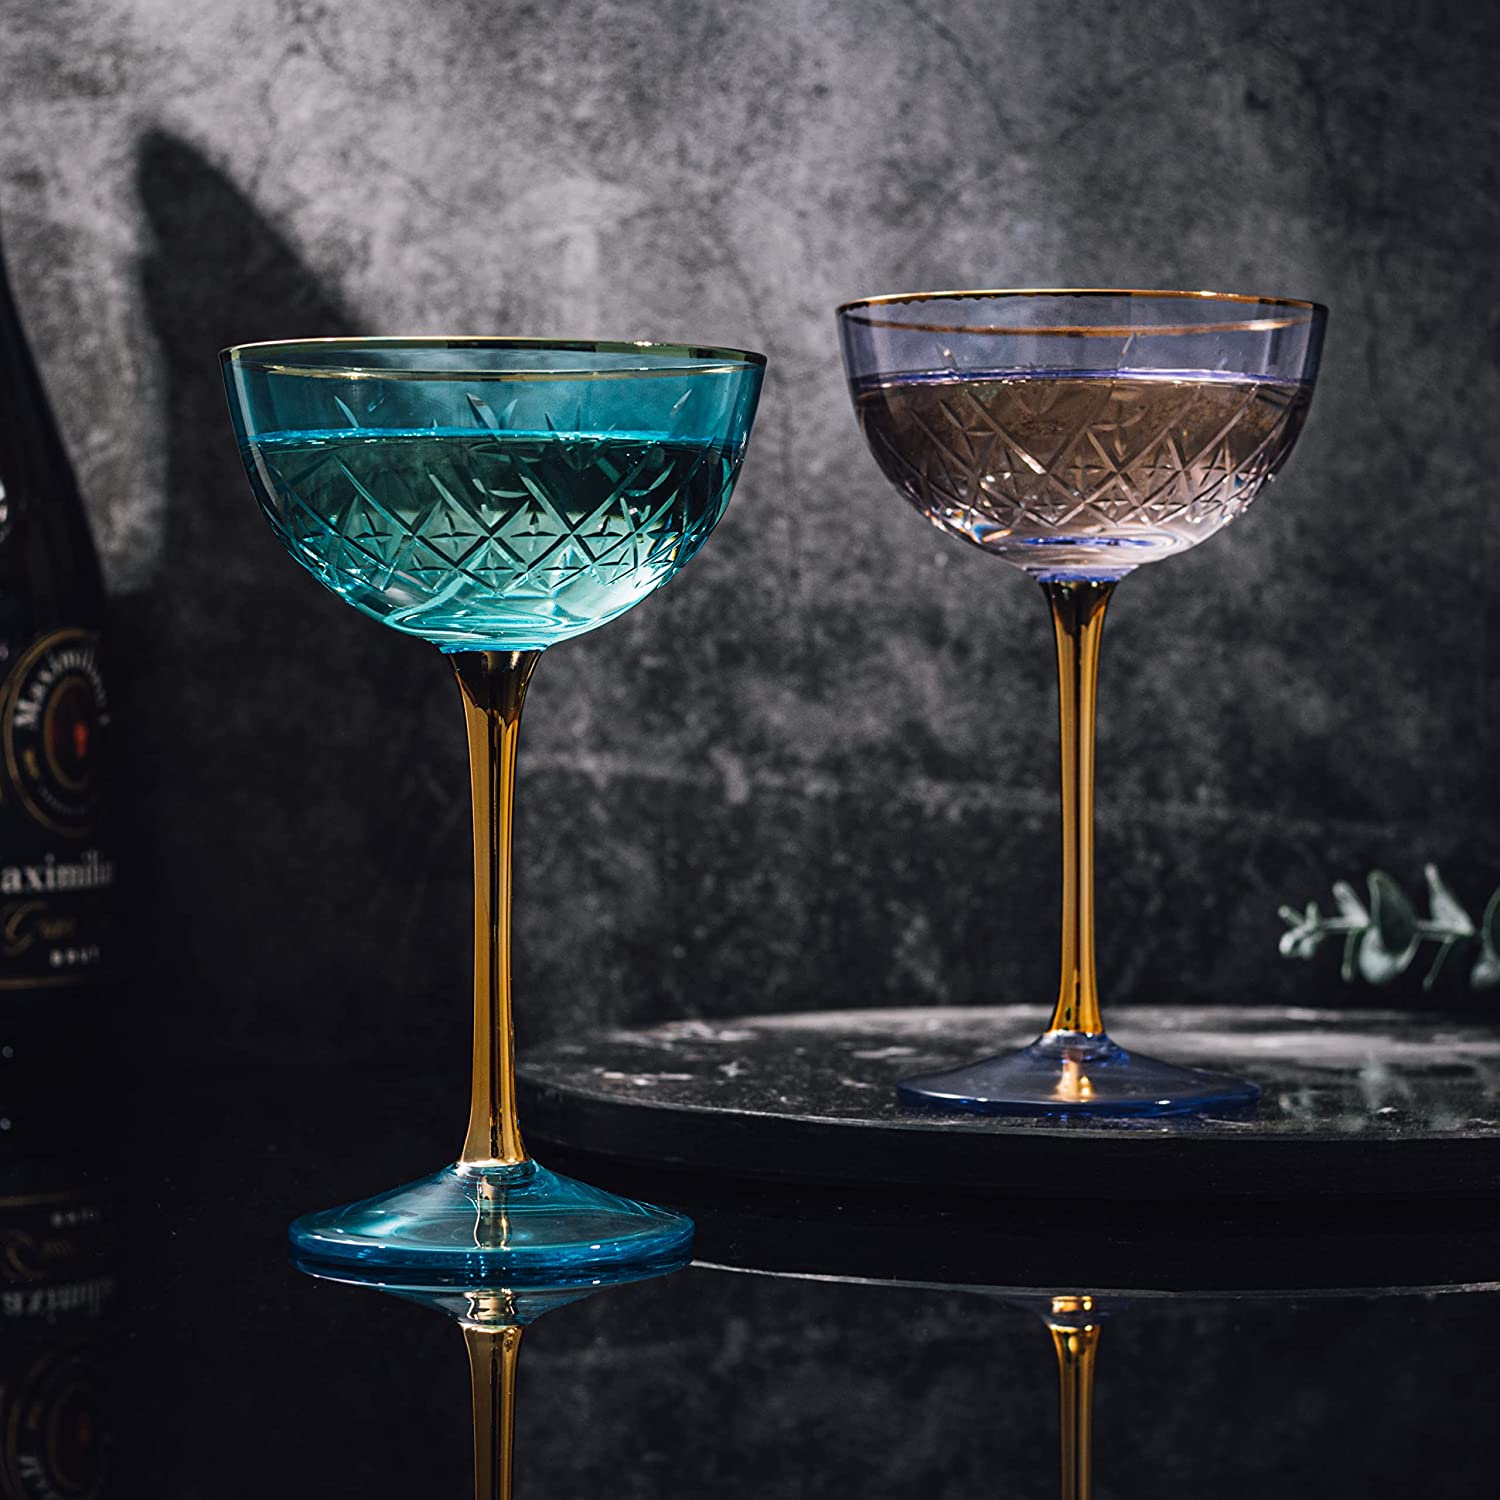 Vintage Crystal Champagne Coupe Glasses | Set of 6 | 4-5 oz Classic Cocktail Glassware - Martini, Manhattan, Cosmopolitan, Sidecar, Daiquiri | 1920s